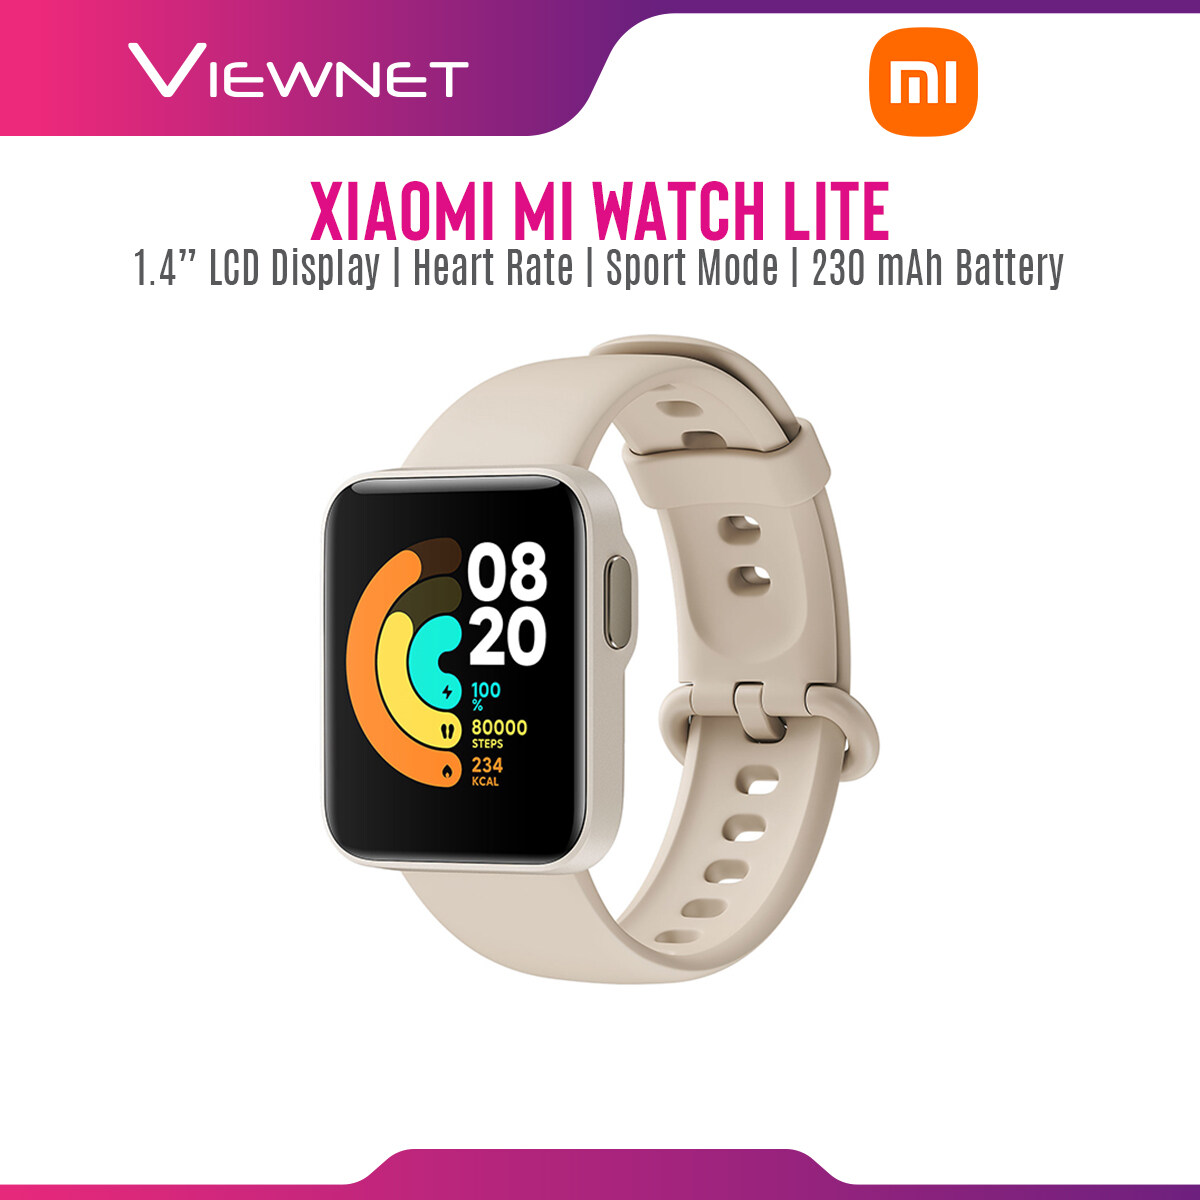 Xiaomi Mi Watch Lite with 1.4